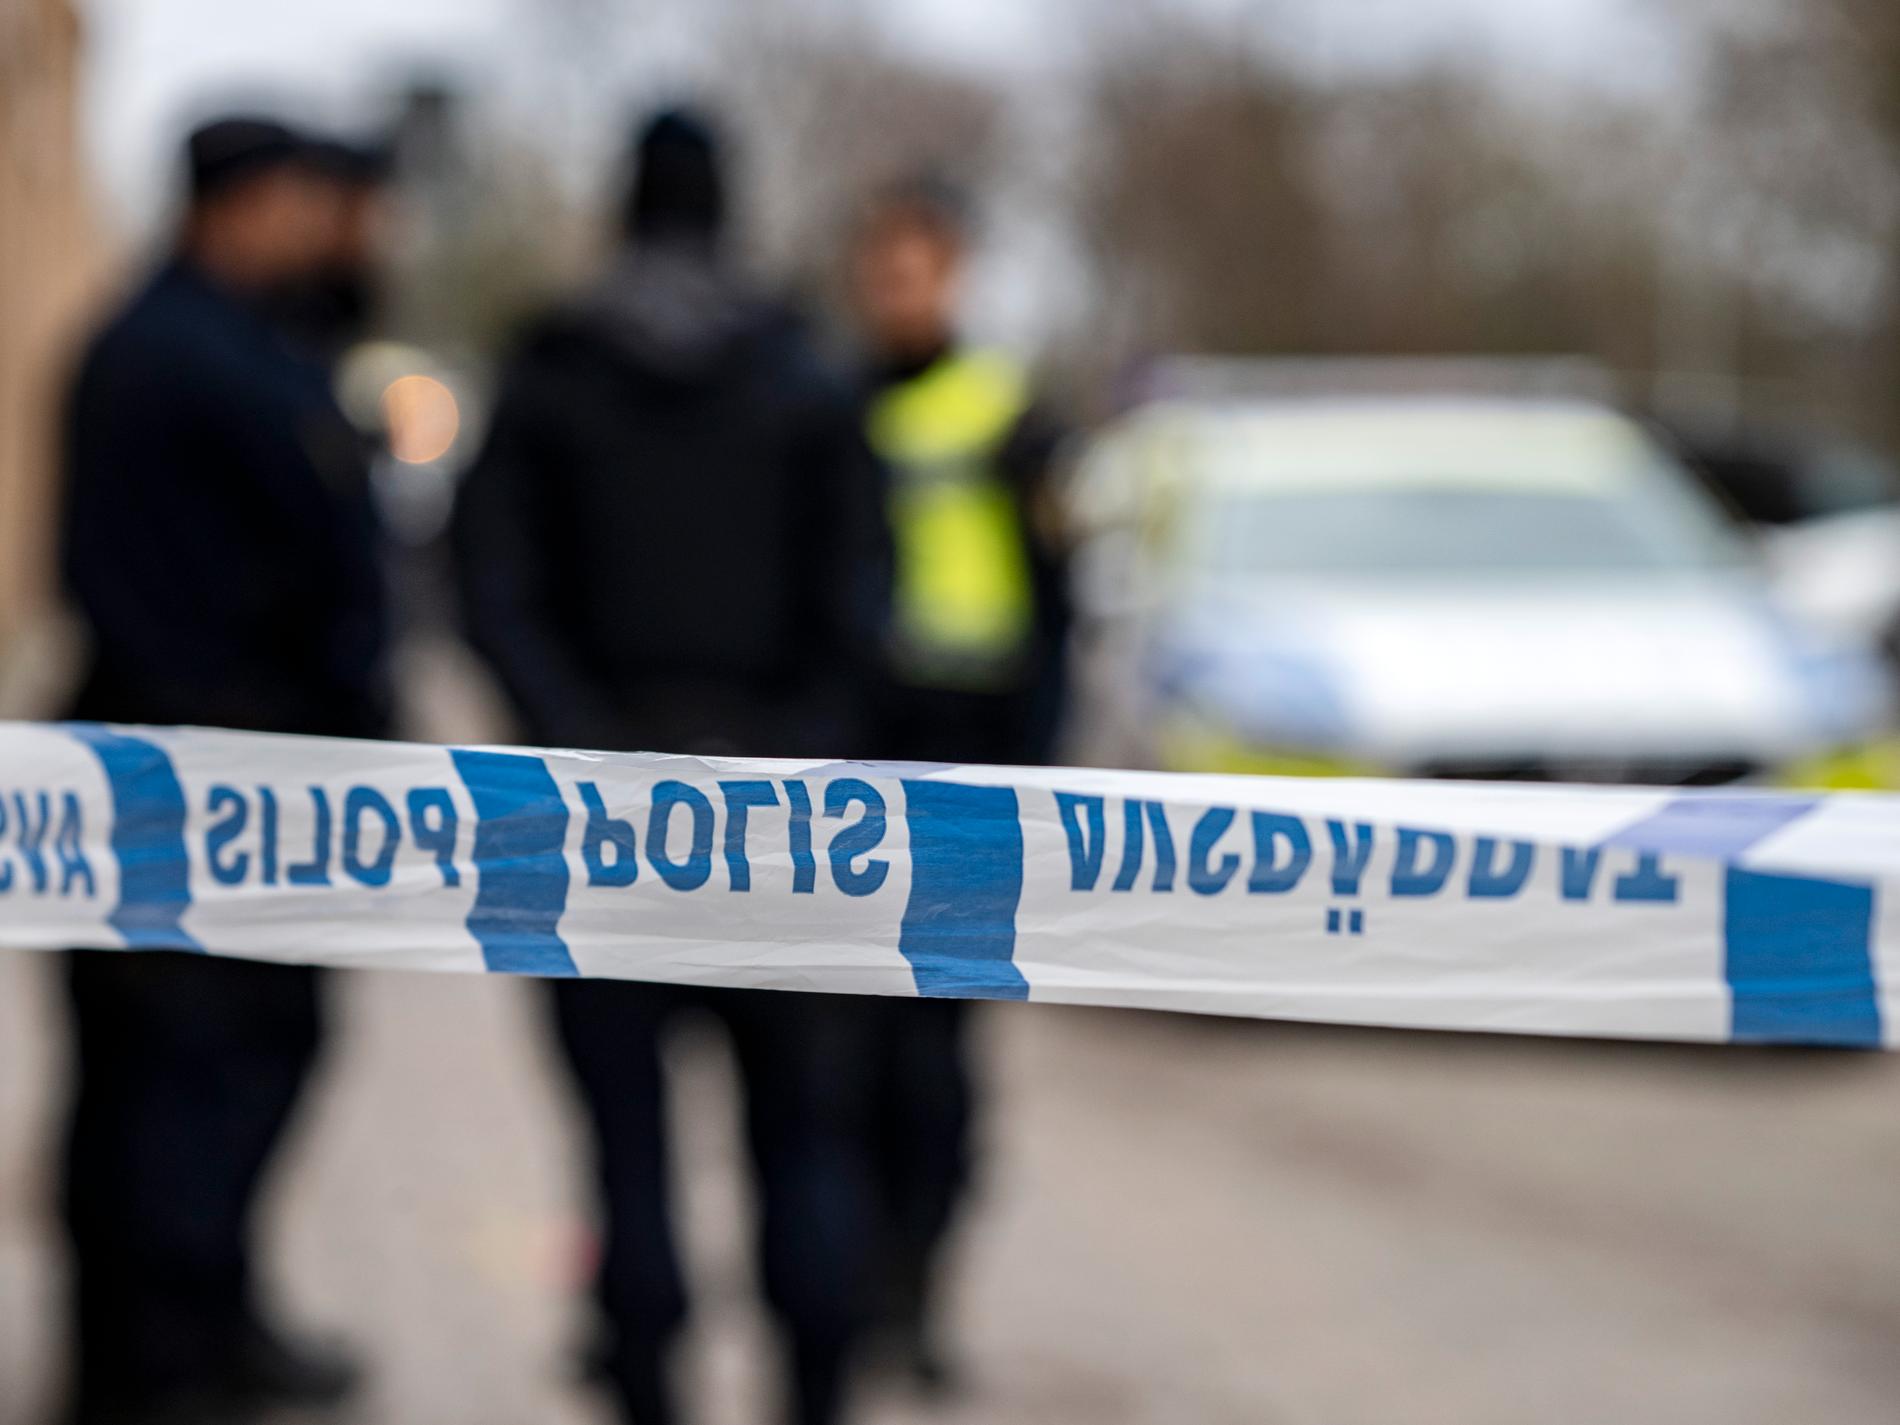 Polis utreder dubbelmord i Gävle